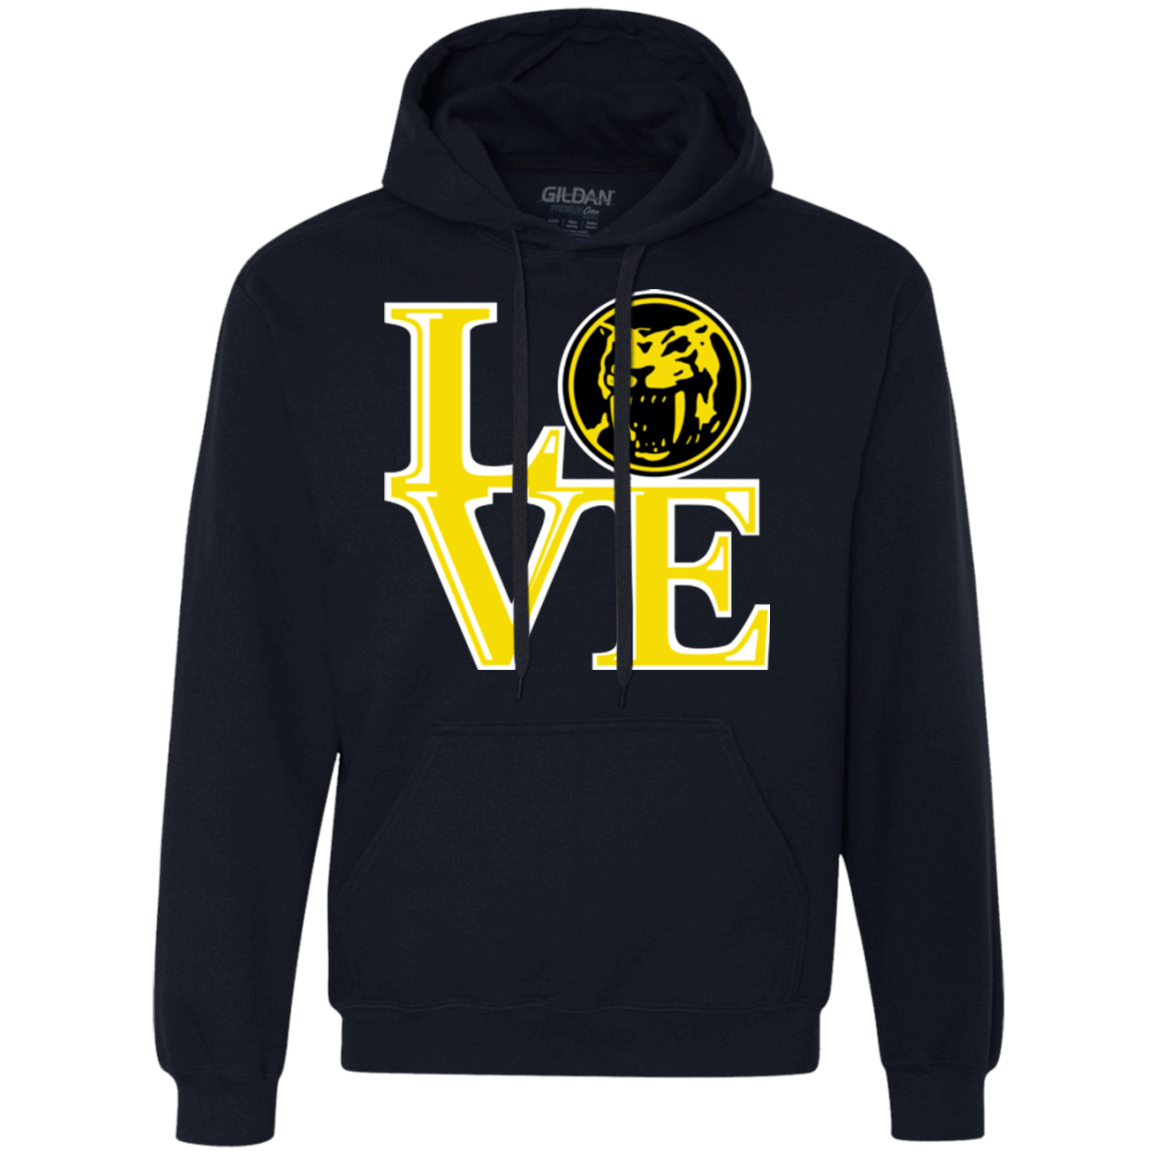 Sweatshirts Navy / Small Yellow Ranger LOVE Premium Fleece Hoodie